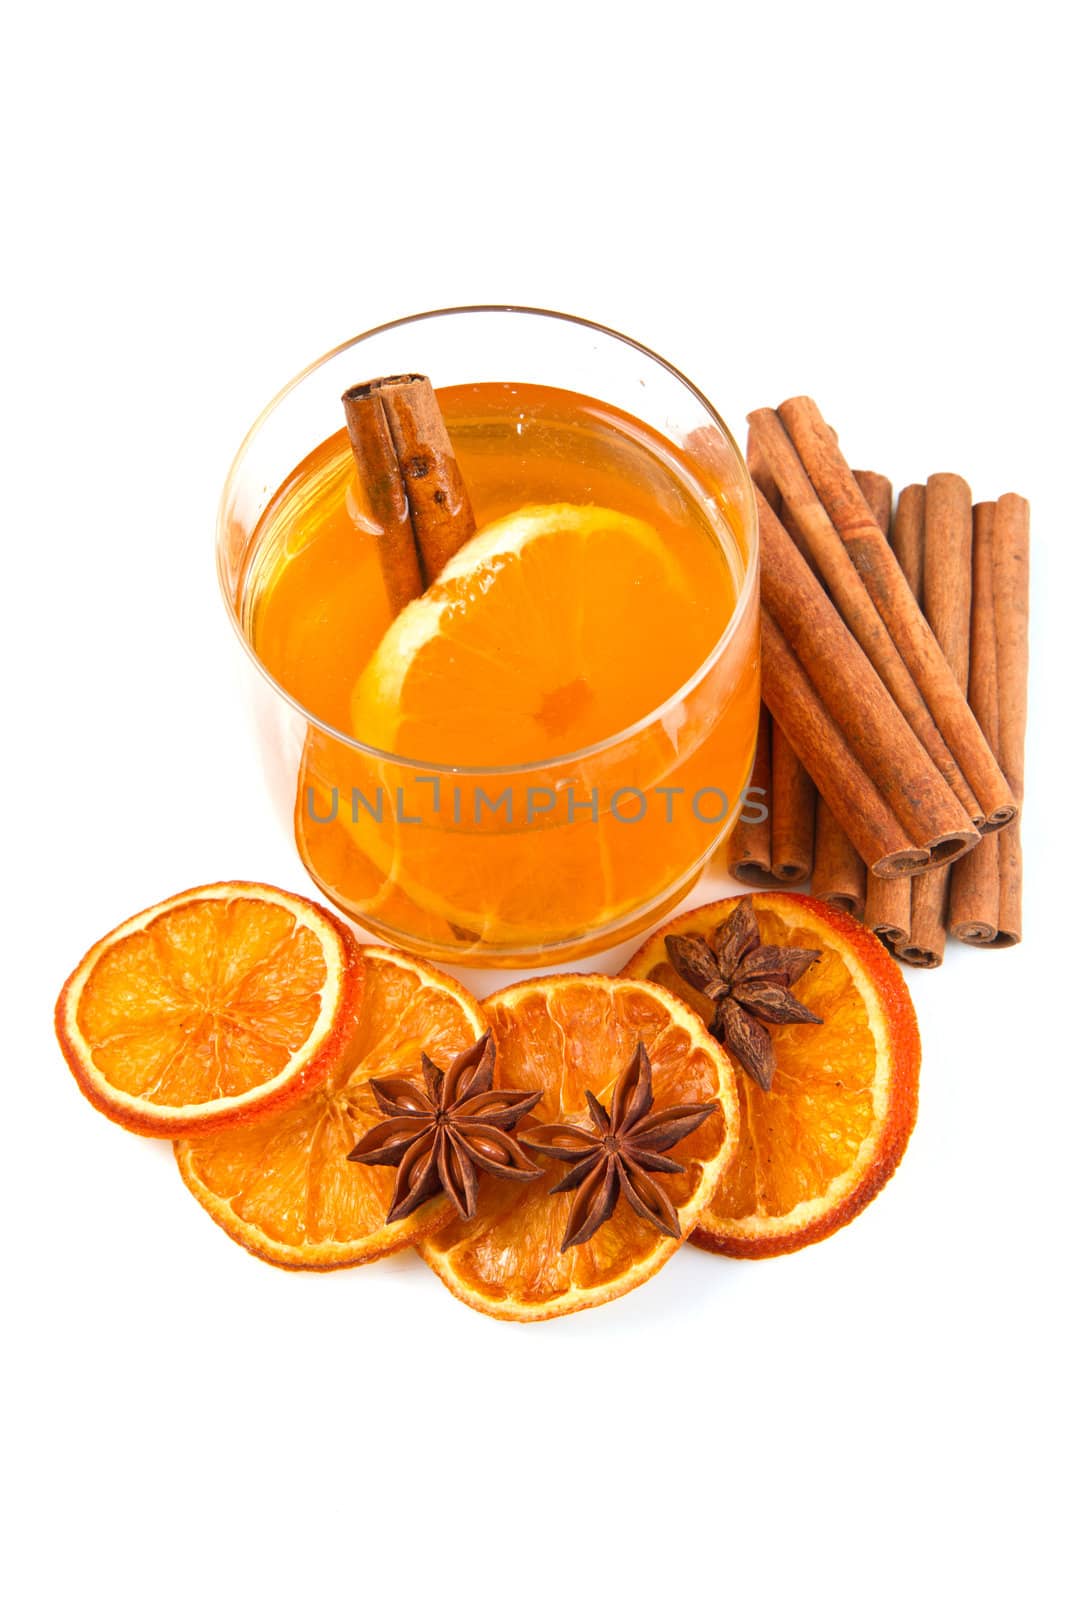 tea with oranges and cinnamon